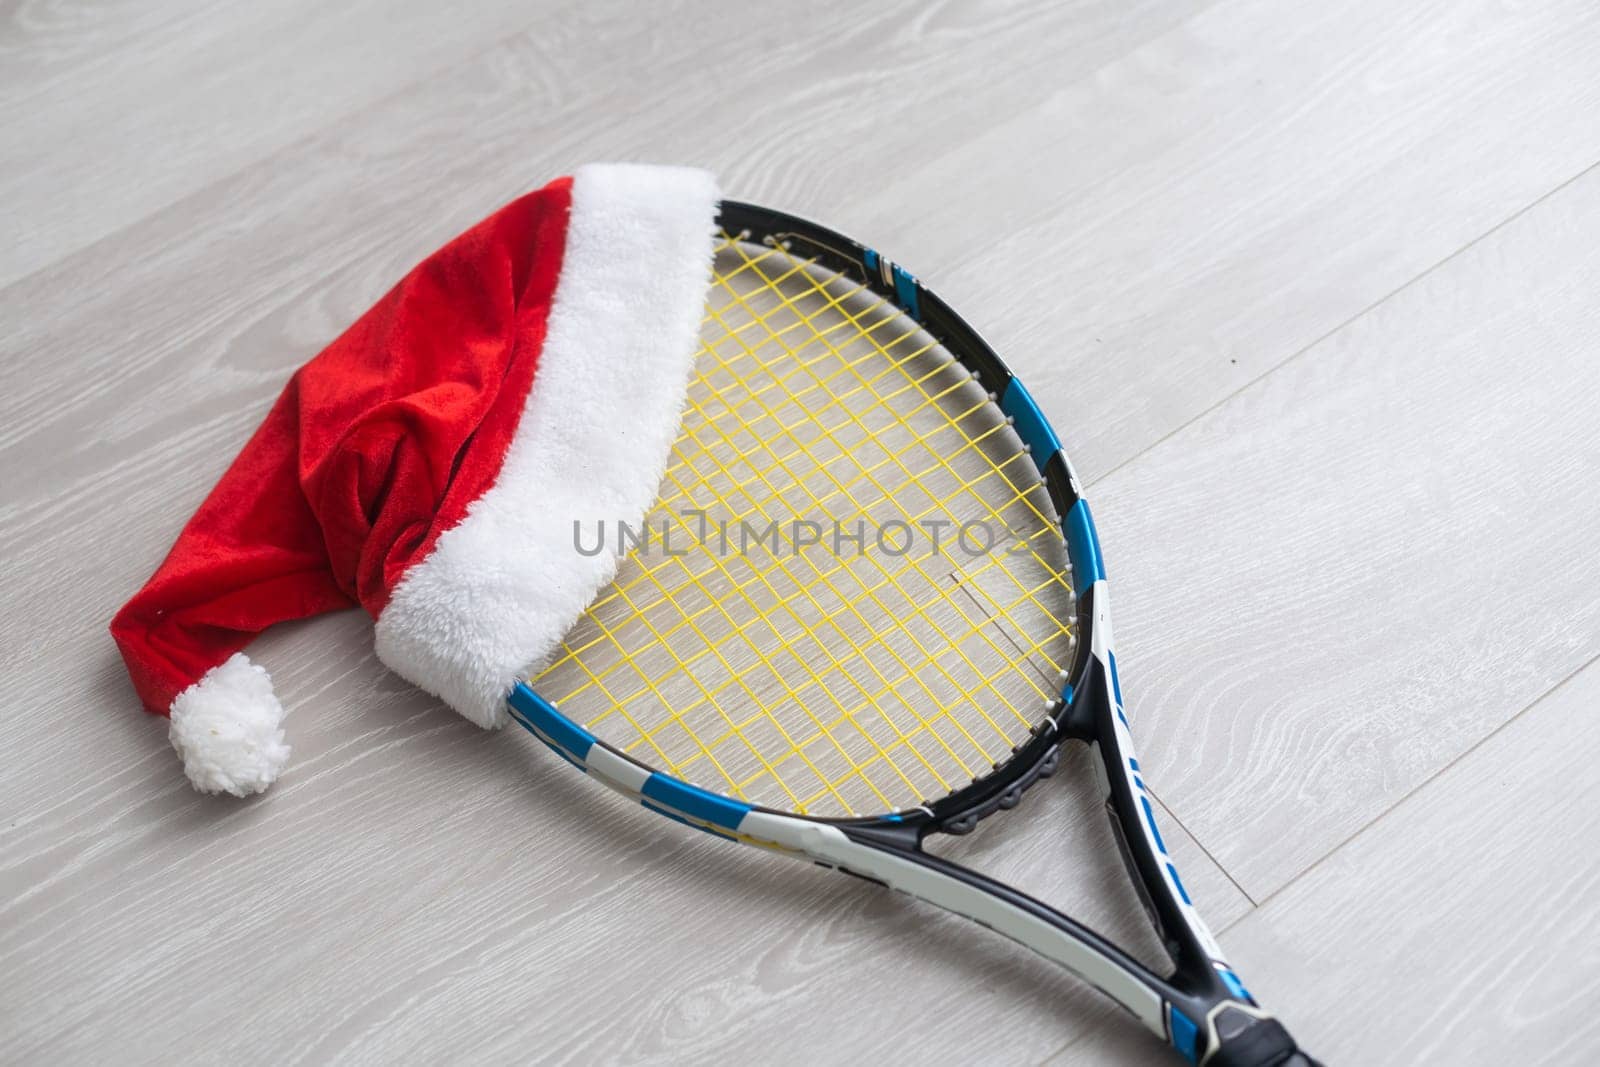 santa hat on tennis racket on white background.